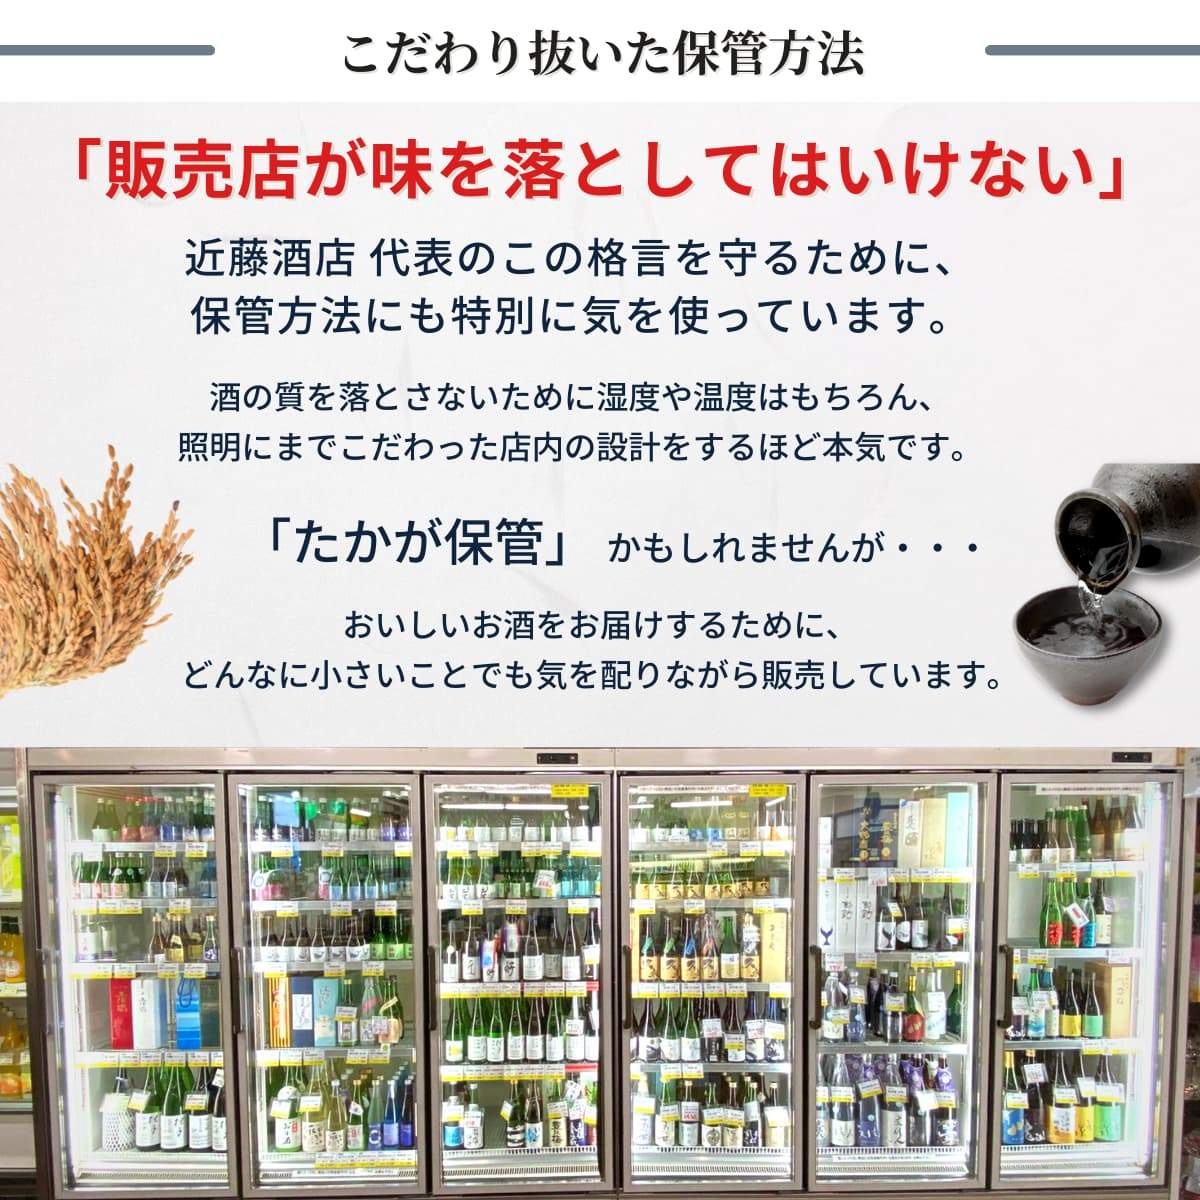 【超限定】亀泉 純米大吟醸 原酒 令和の目覚め 1800mL